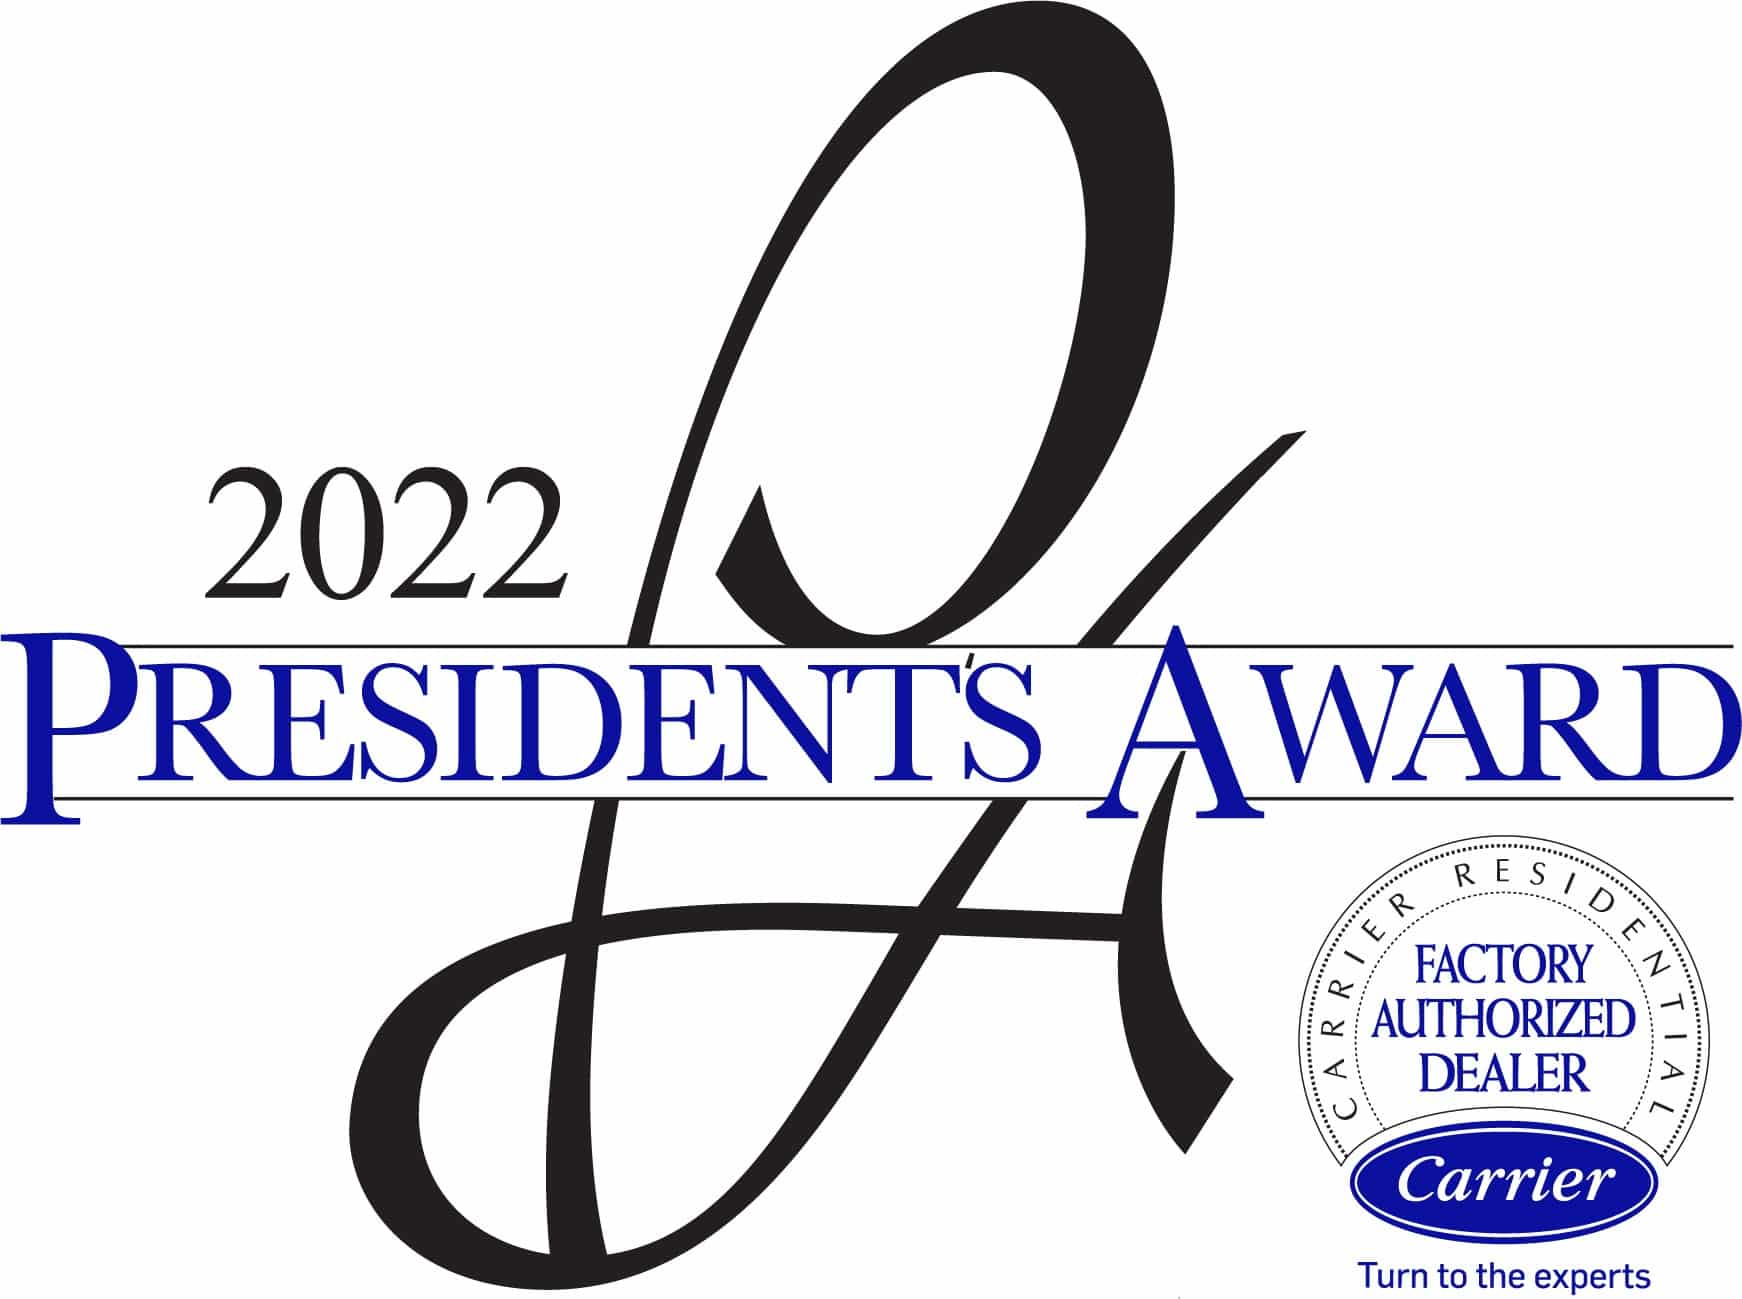 2022 President's Award class=